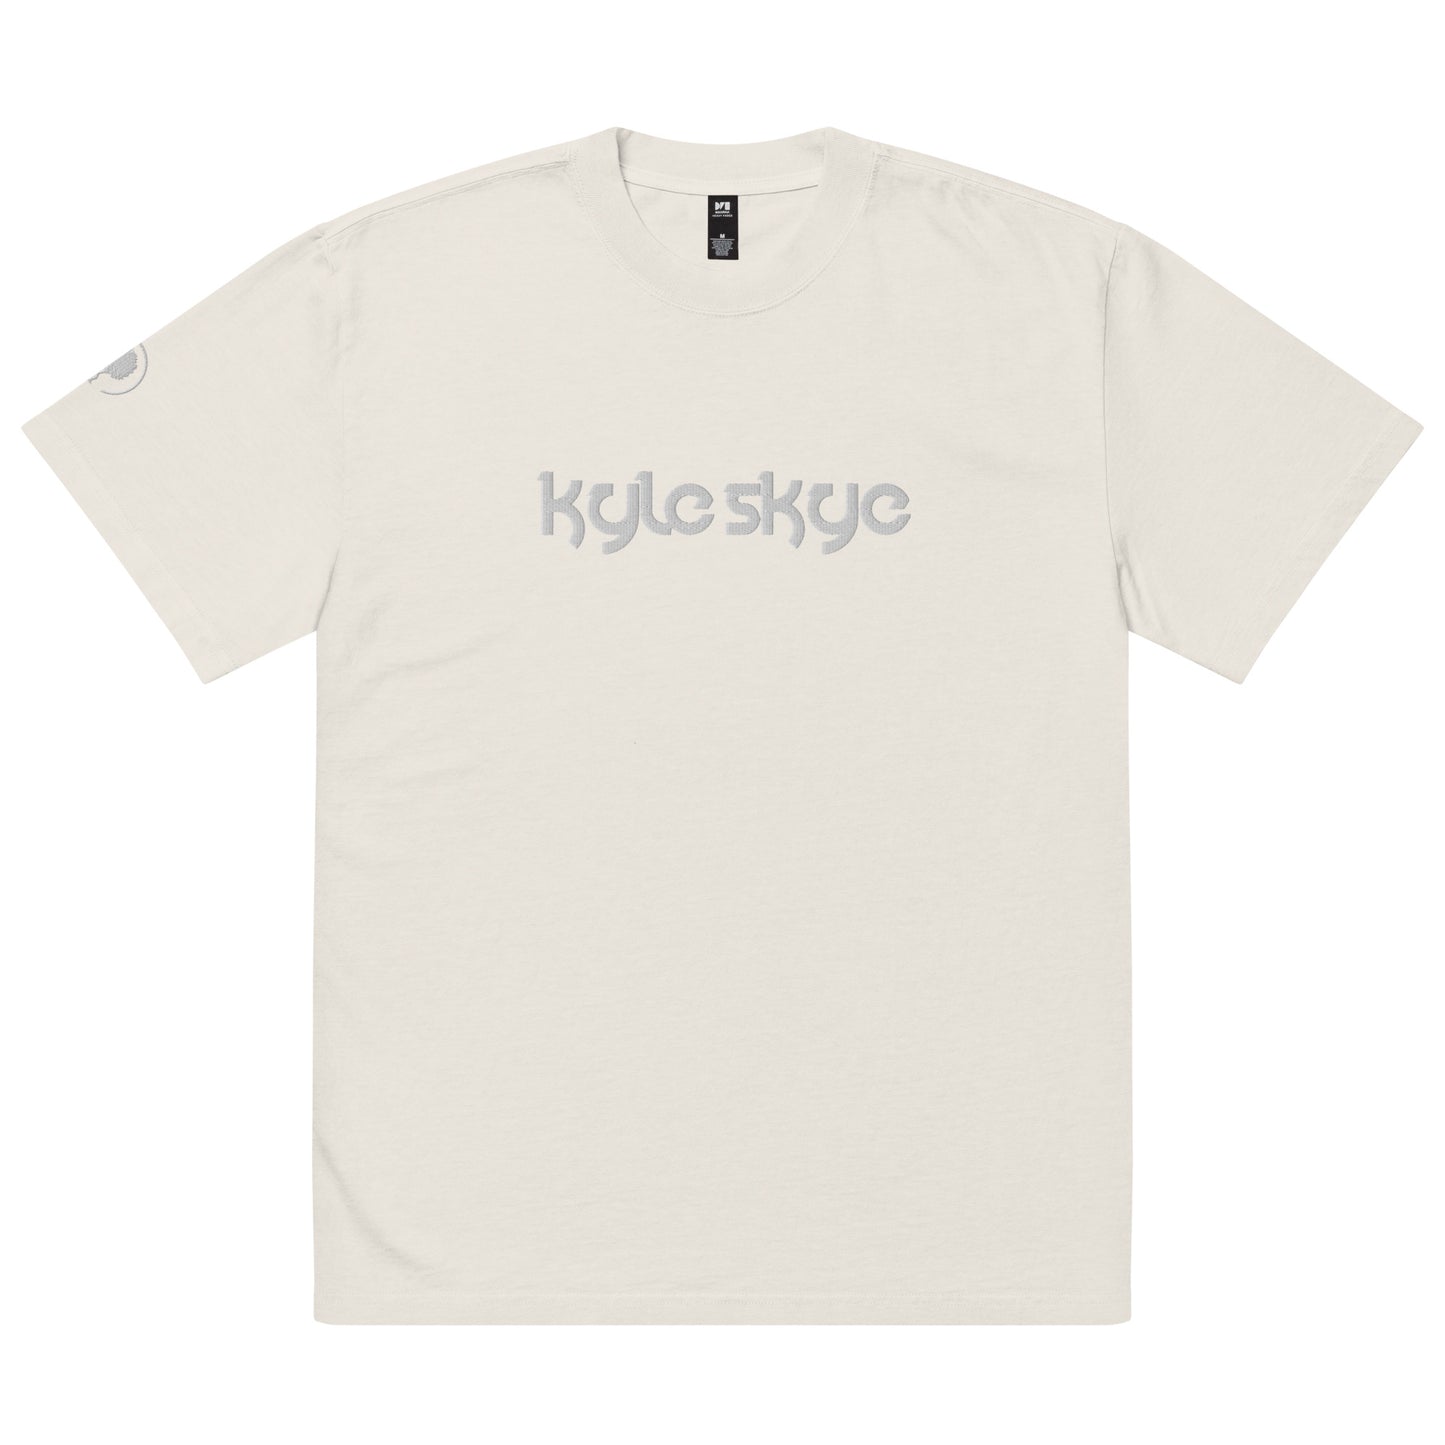 Kyle Skye Oversized Faded T-Shirt